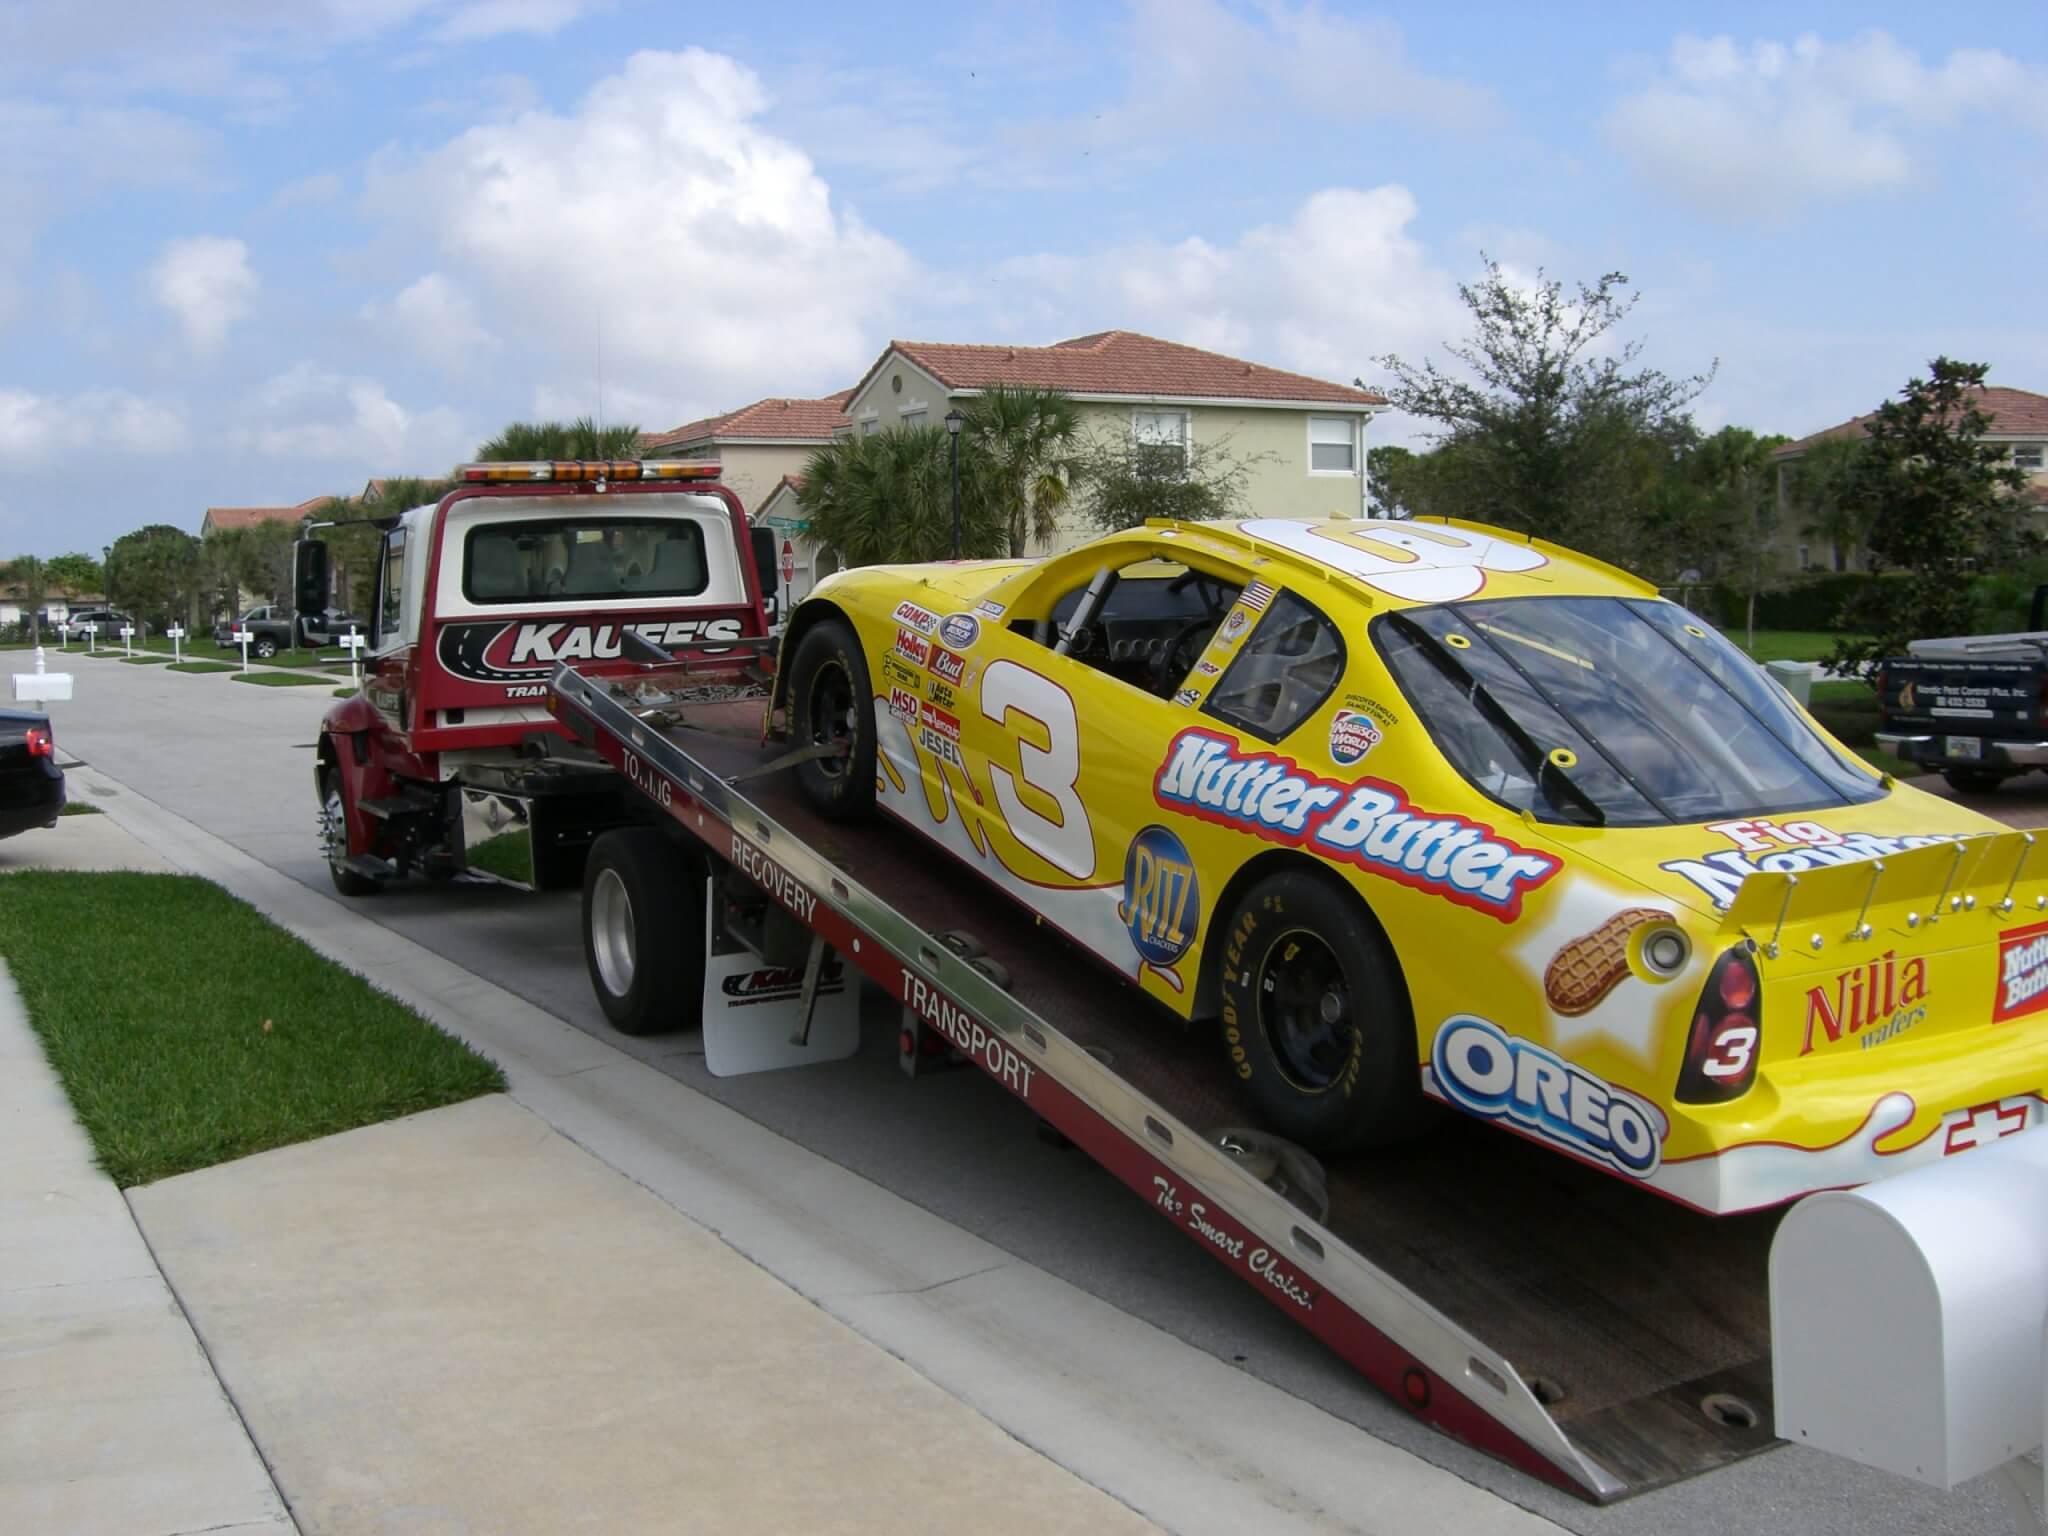 Kauff's truck transporting race car